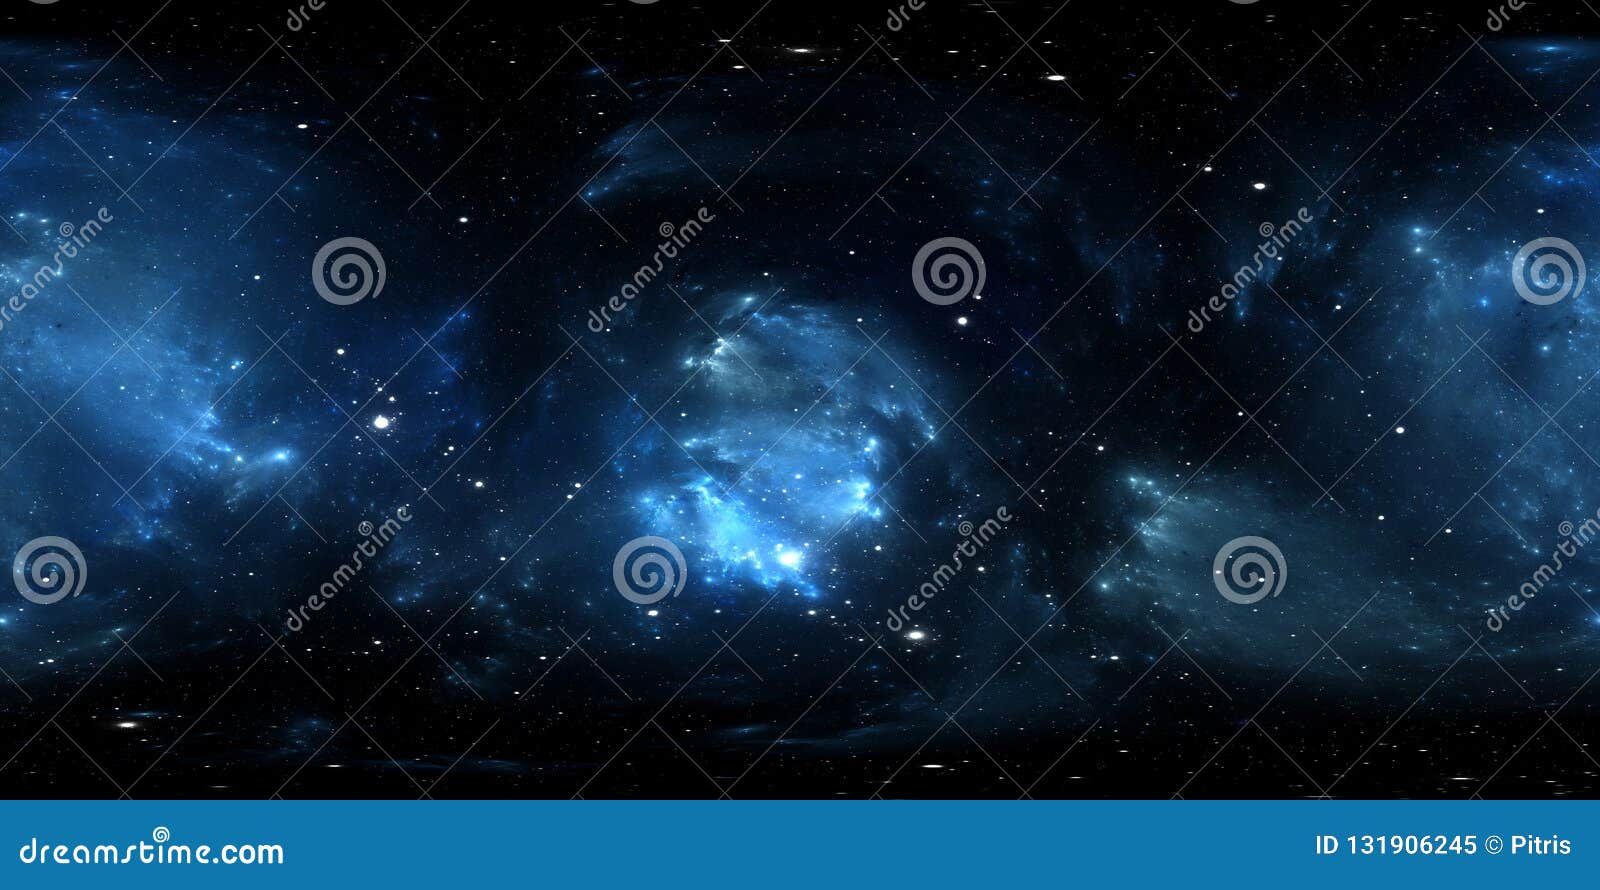 360 degree space nebula panorama, equirectangular projection, environment map. hdri spherical panorama. space background